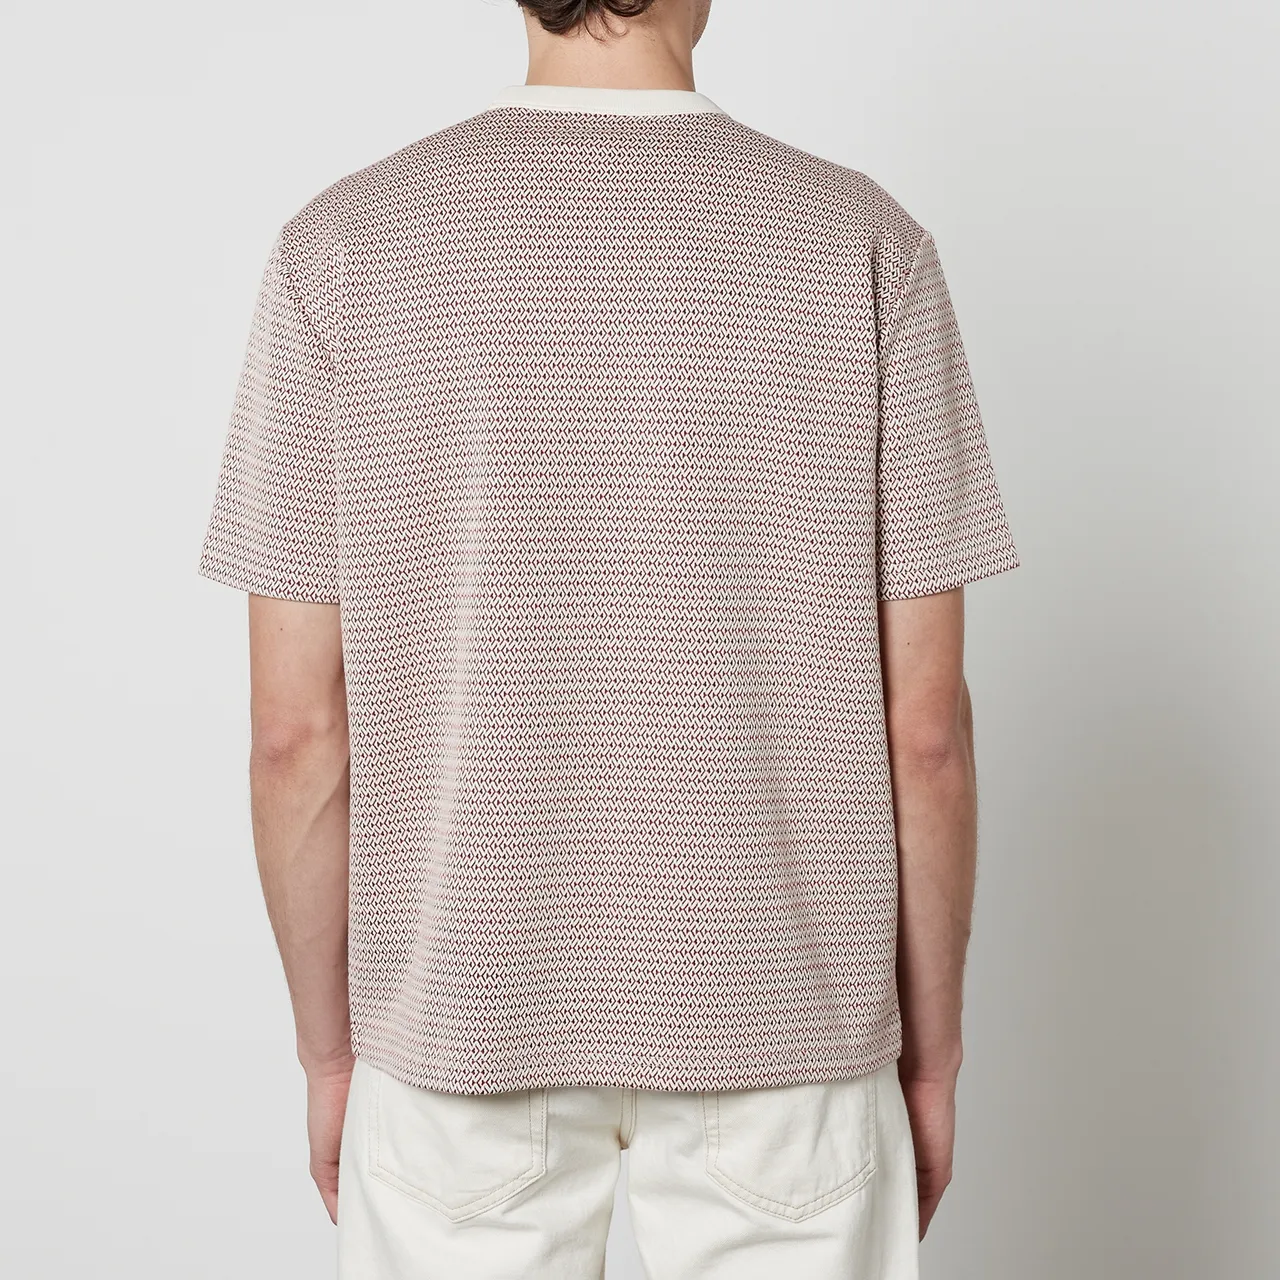 PS Paul Smith Jacquard-Knit T-Shirt